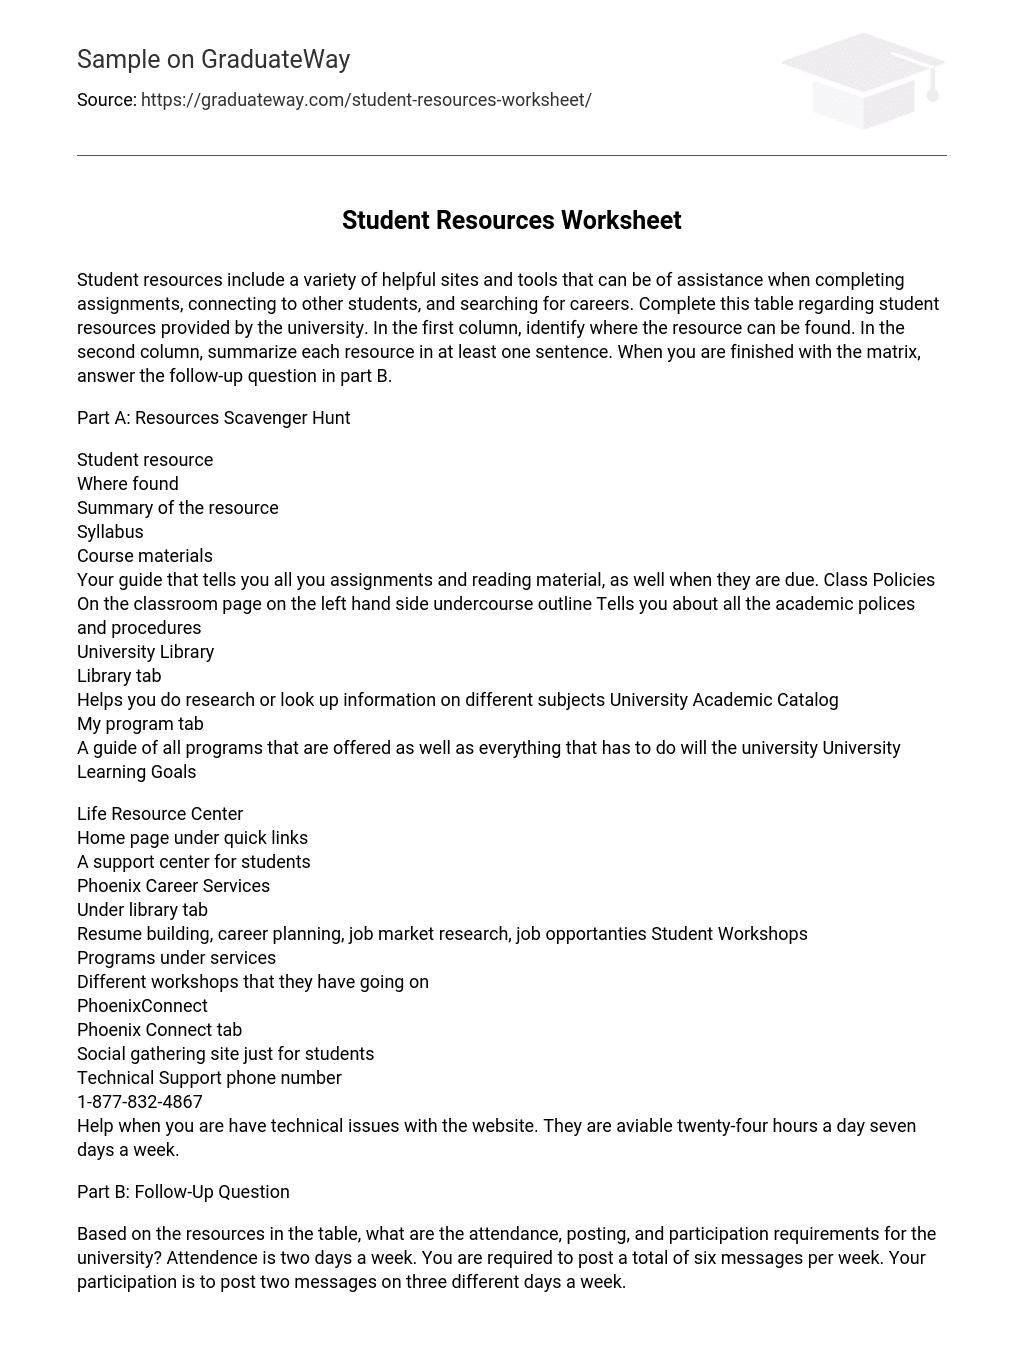 Student Resources Worksheet